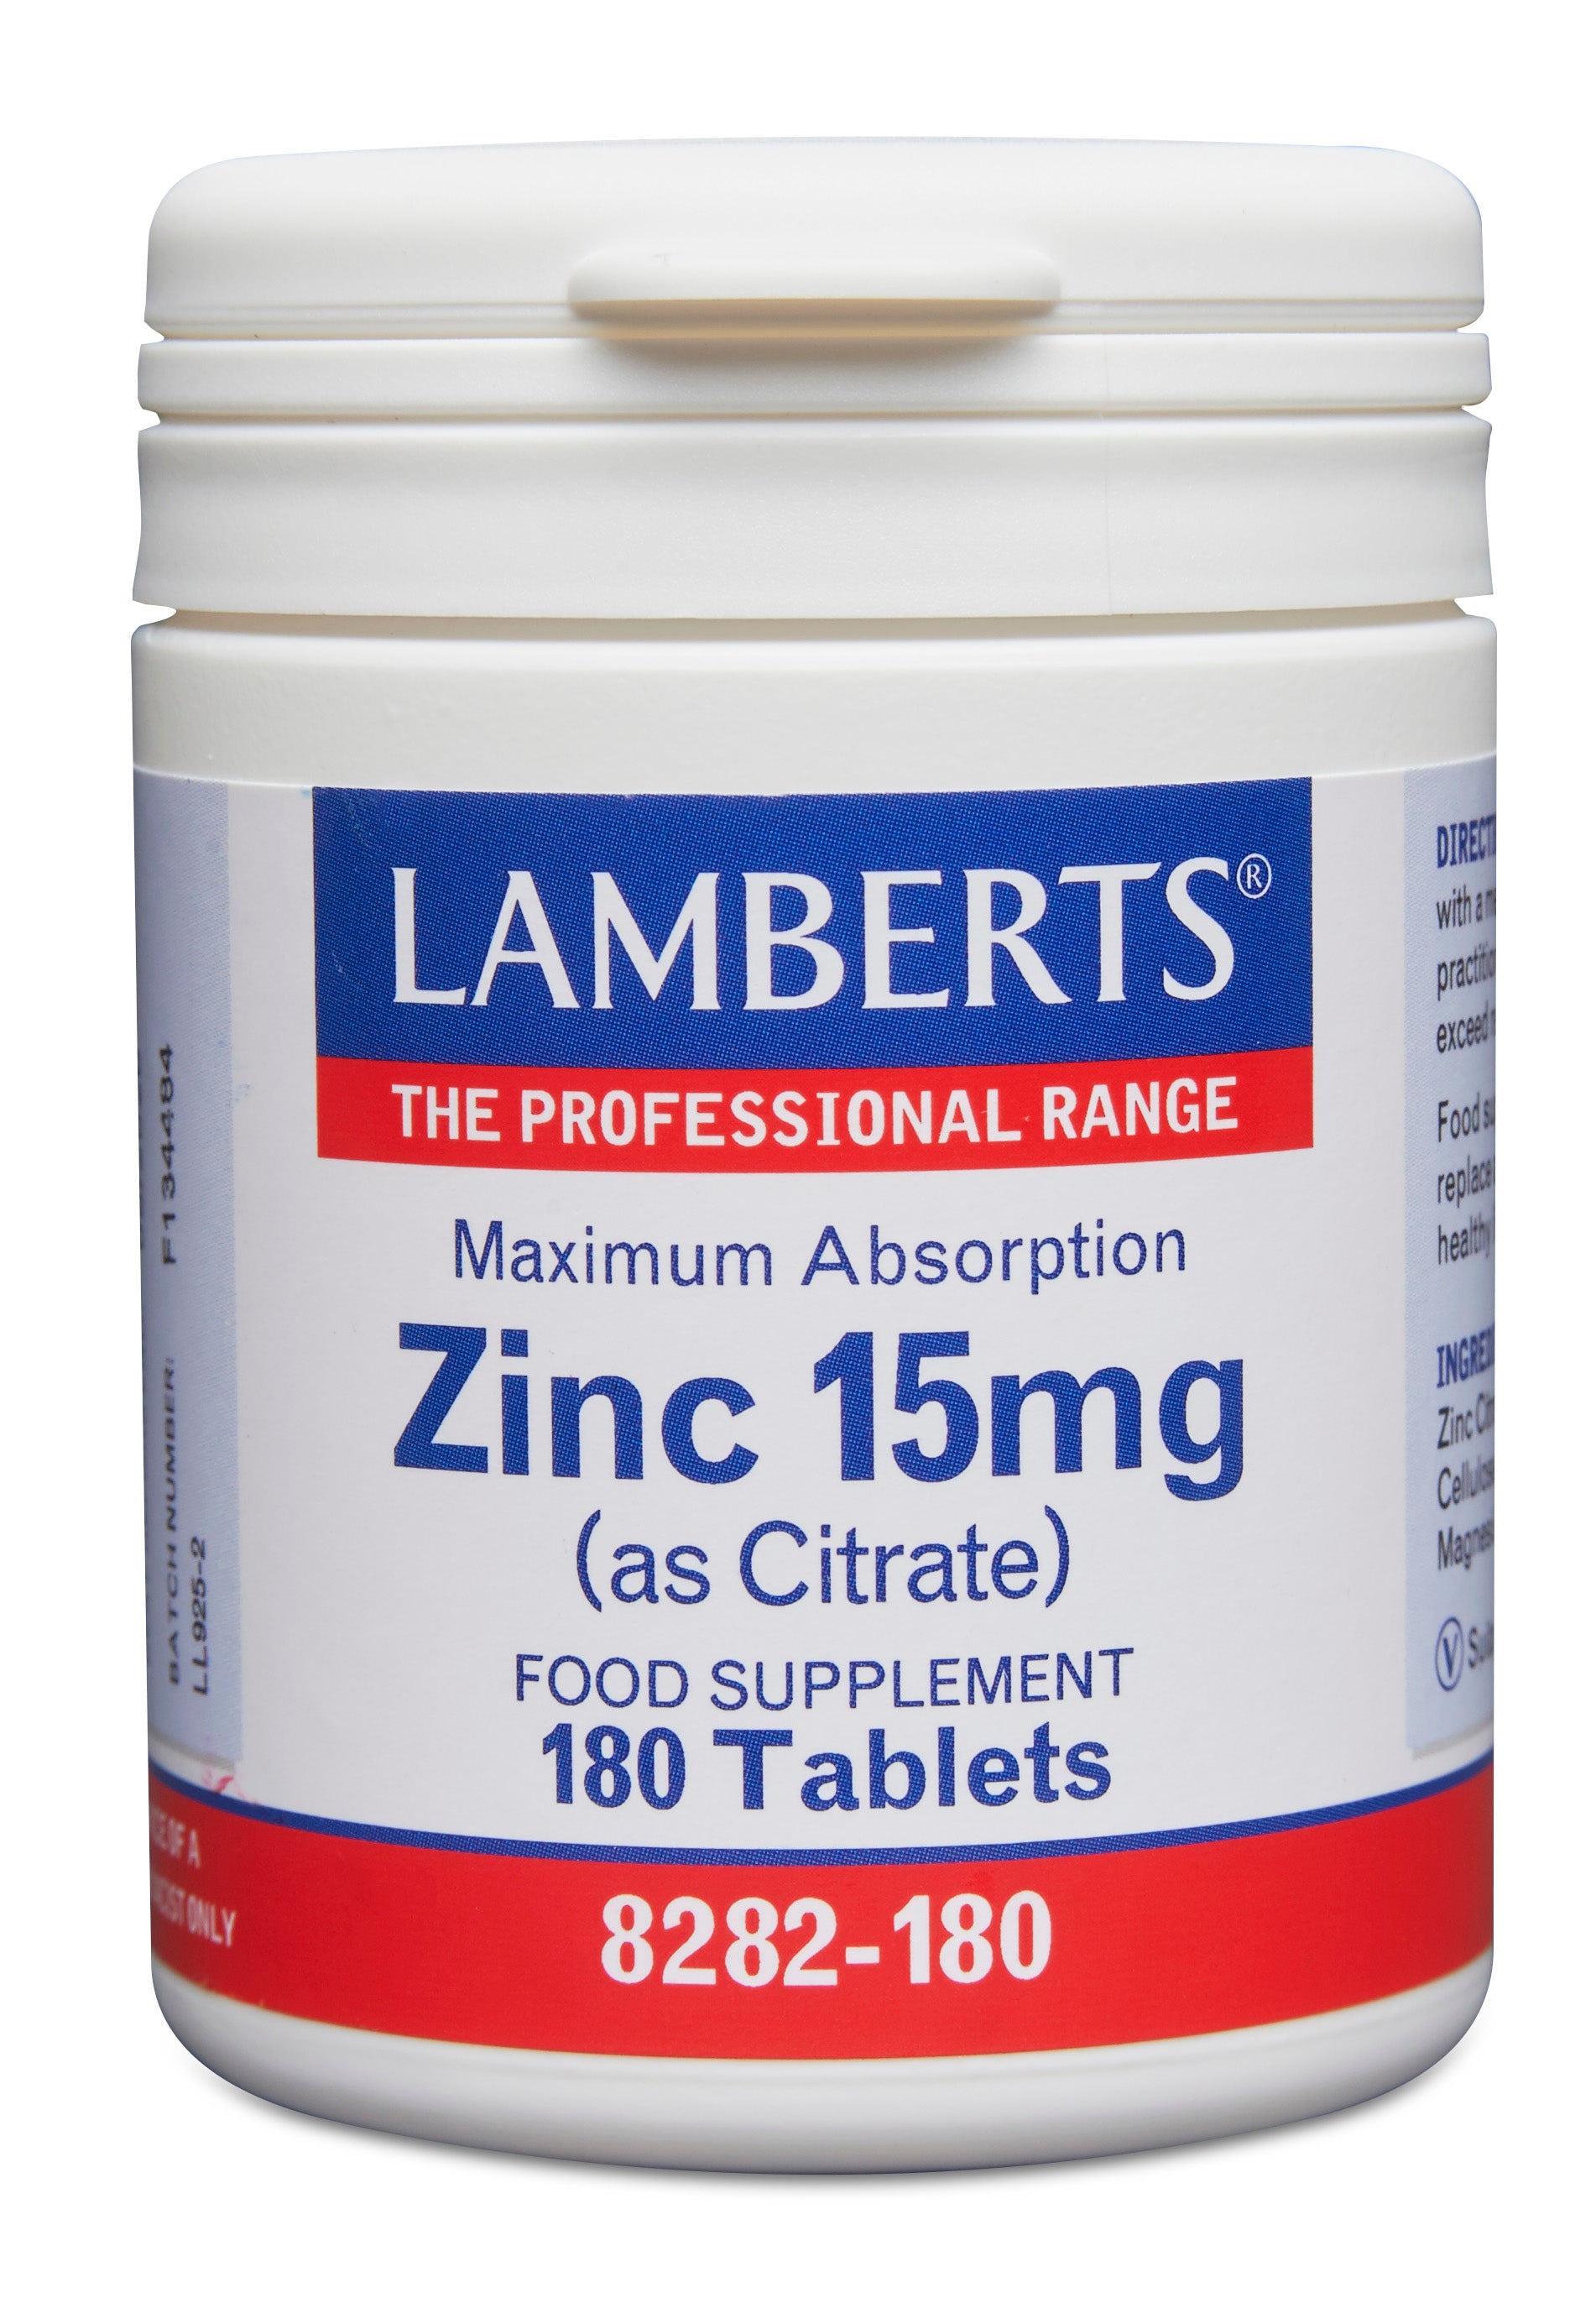 lamberts - 180 Tablets Zinc 15mg